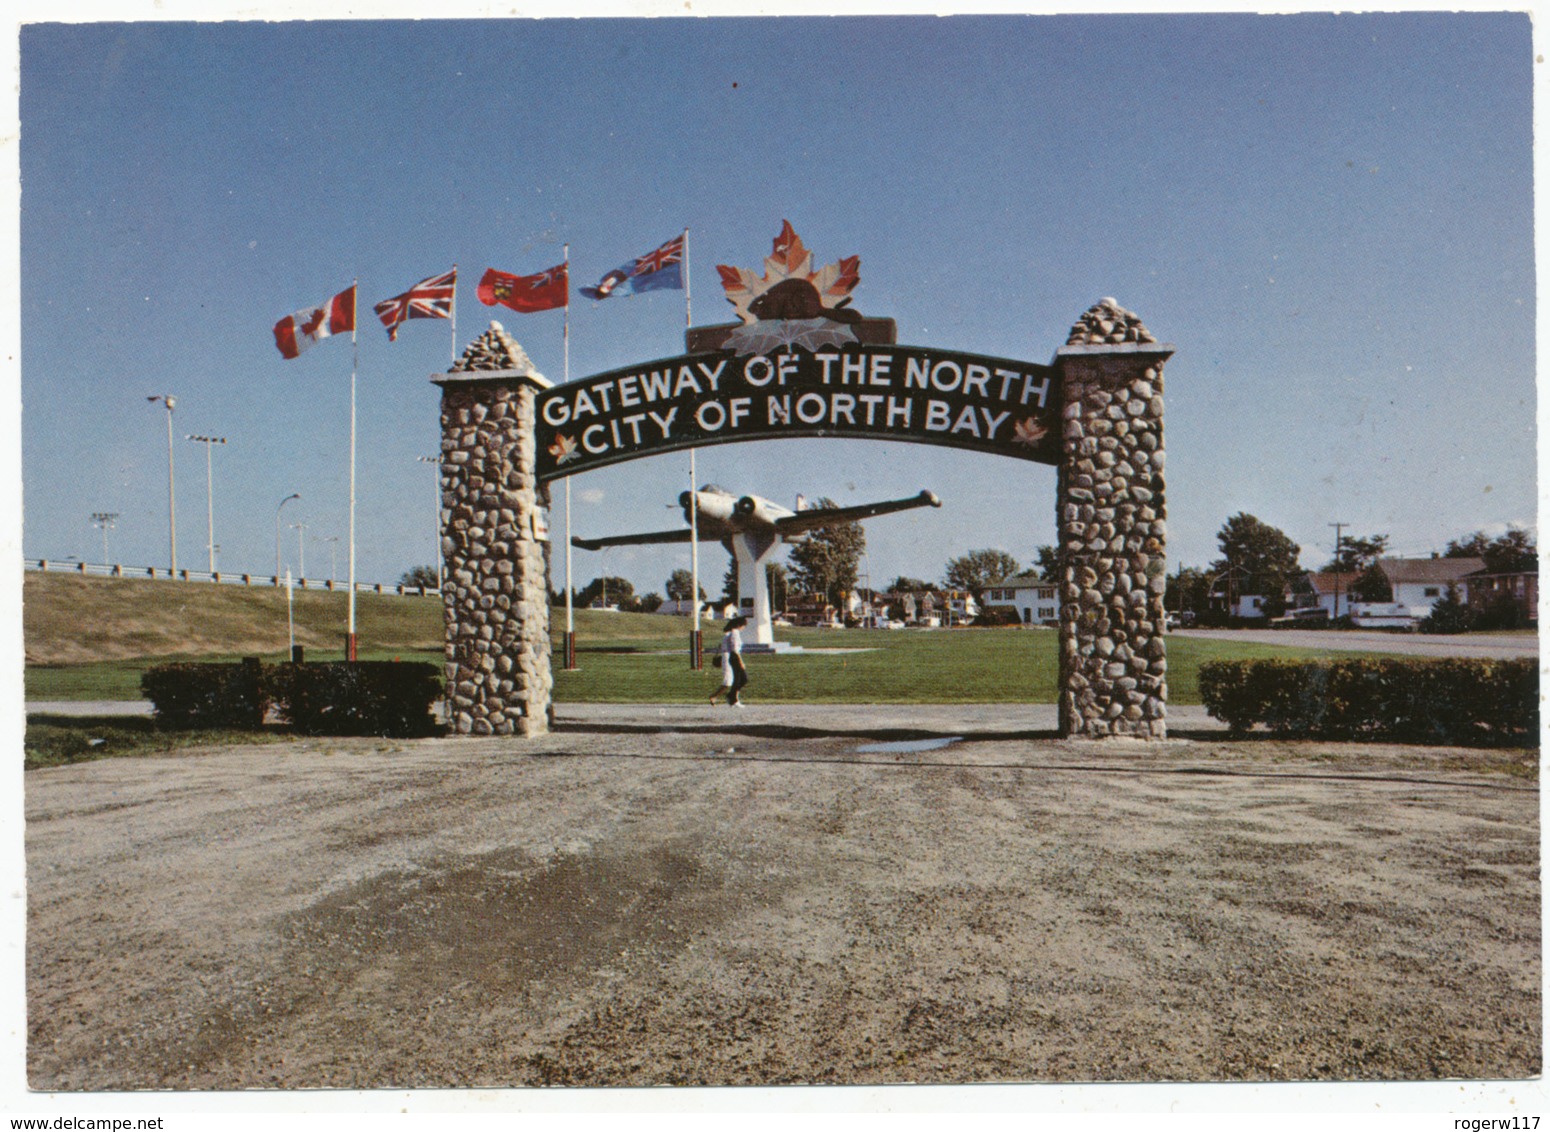 Gateway Of The North, City Of North Bay, Ontario, Canada - North Bay